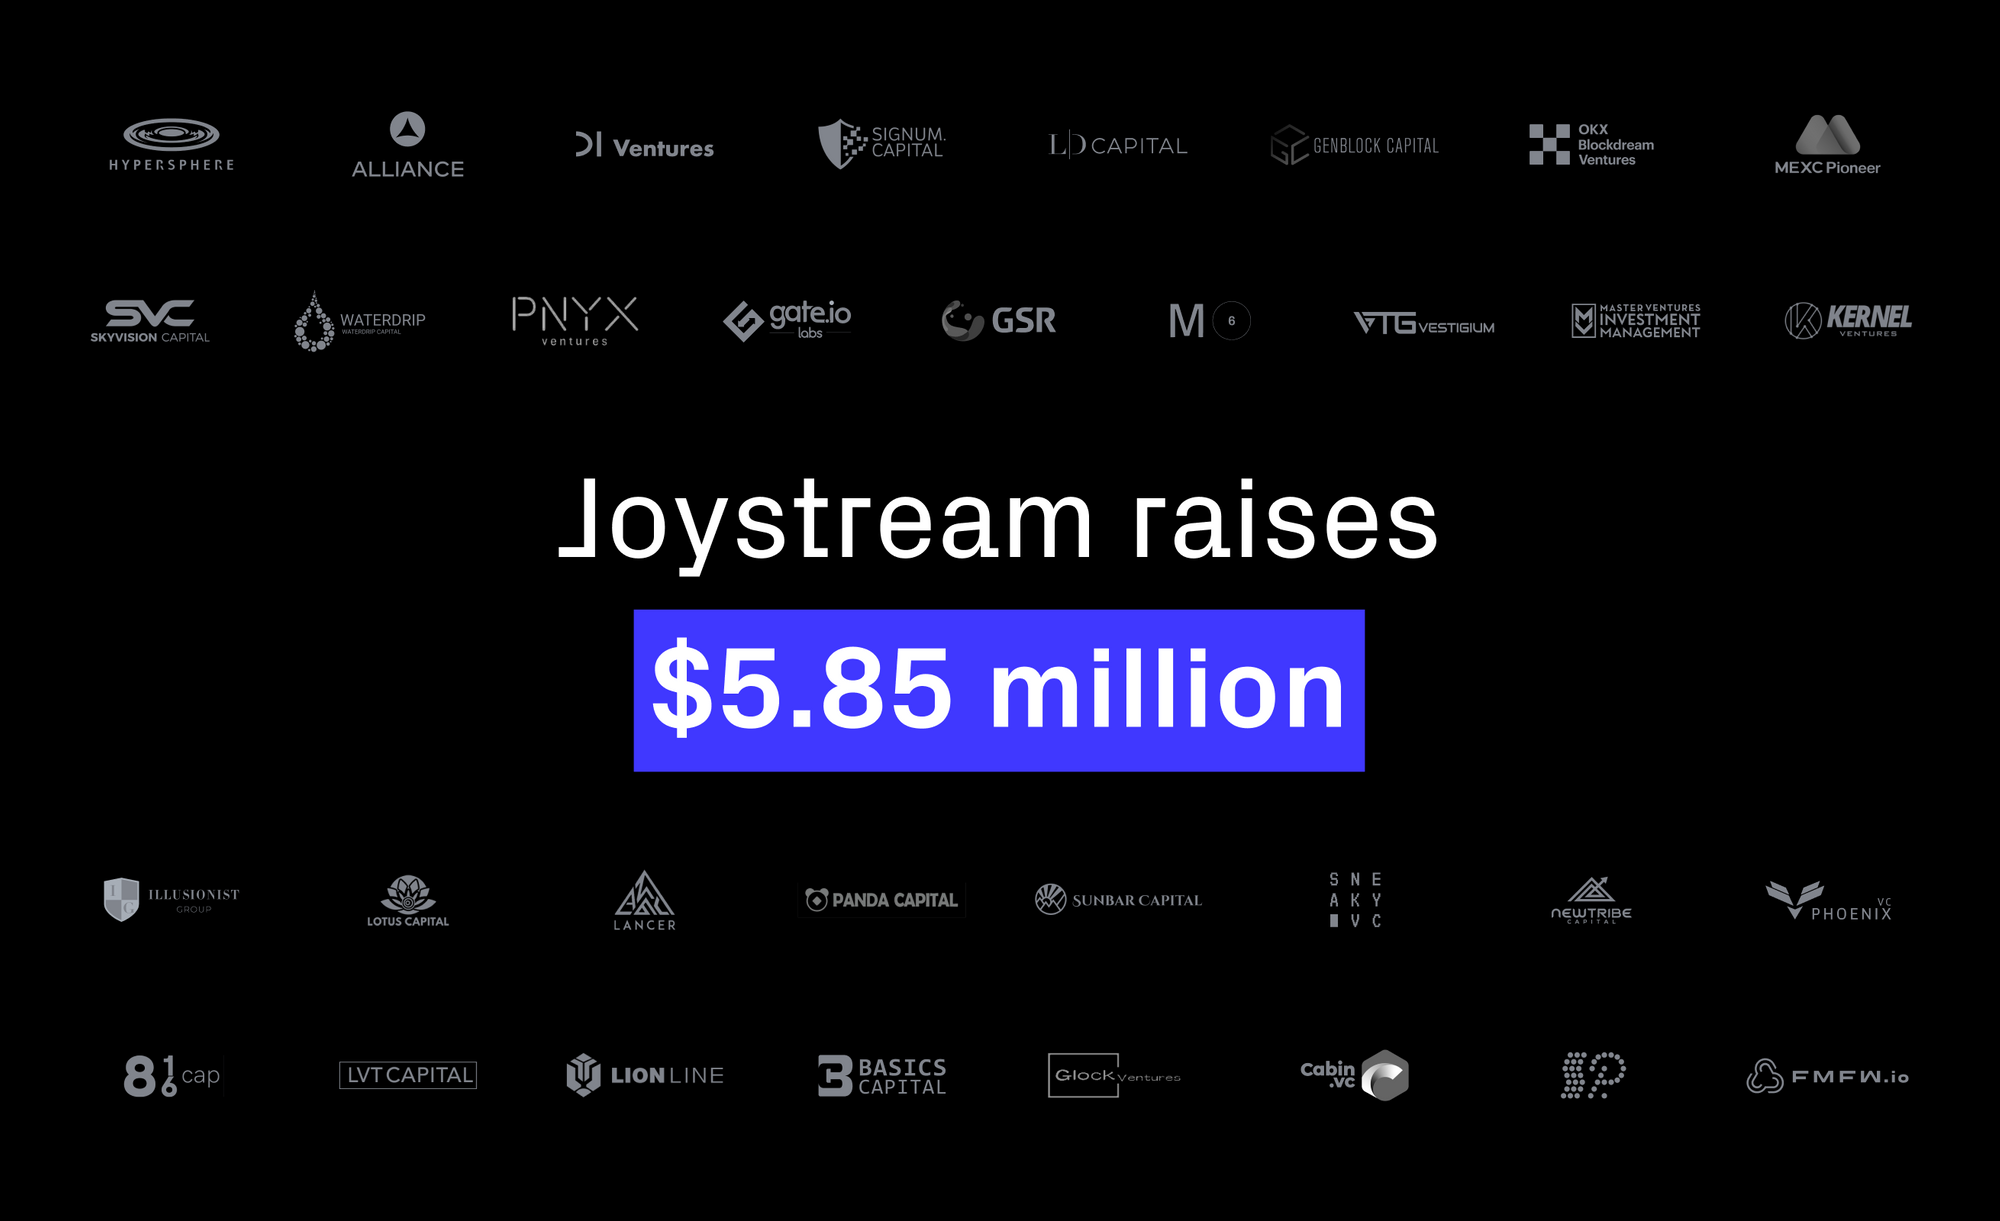 Joystream raises additional $5.85 million dollars in funding